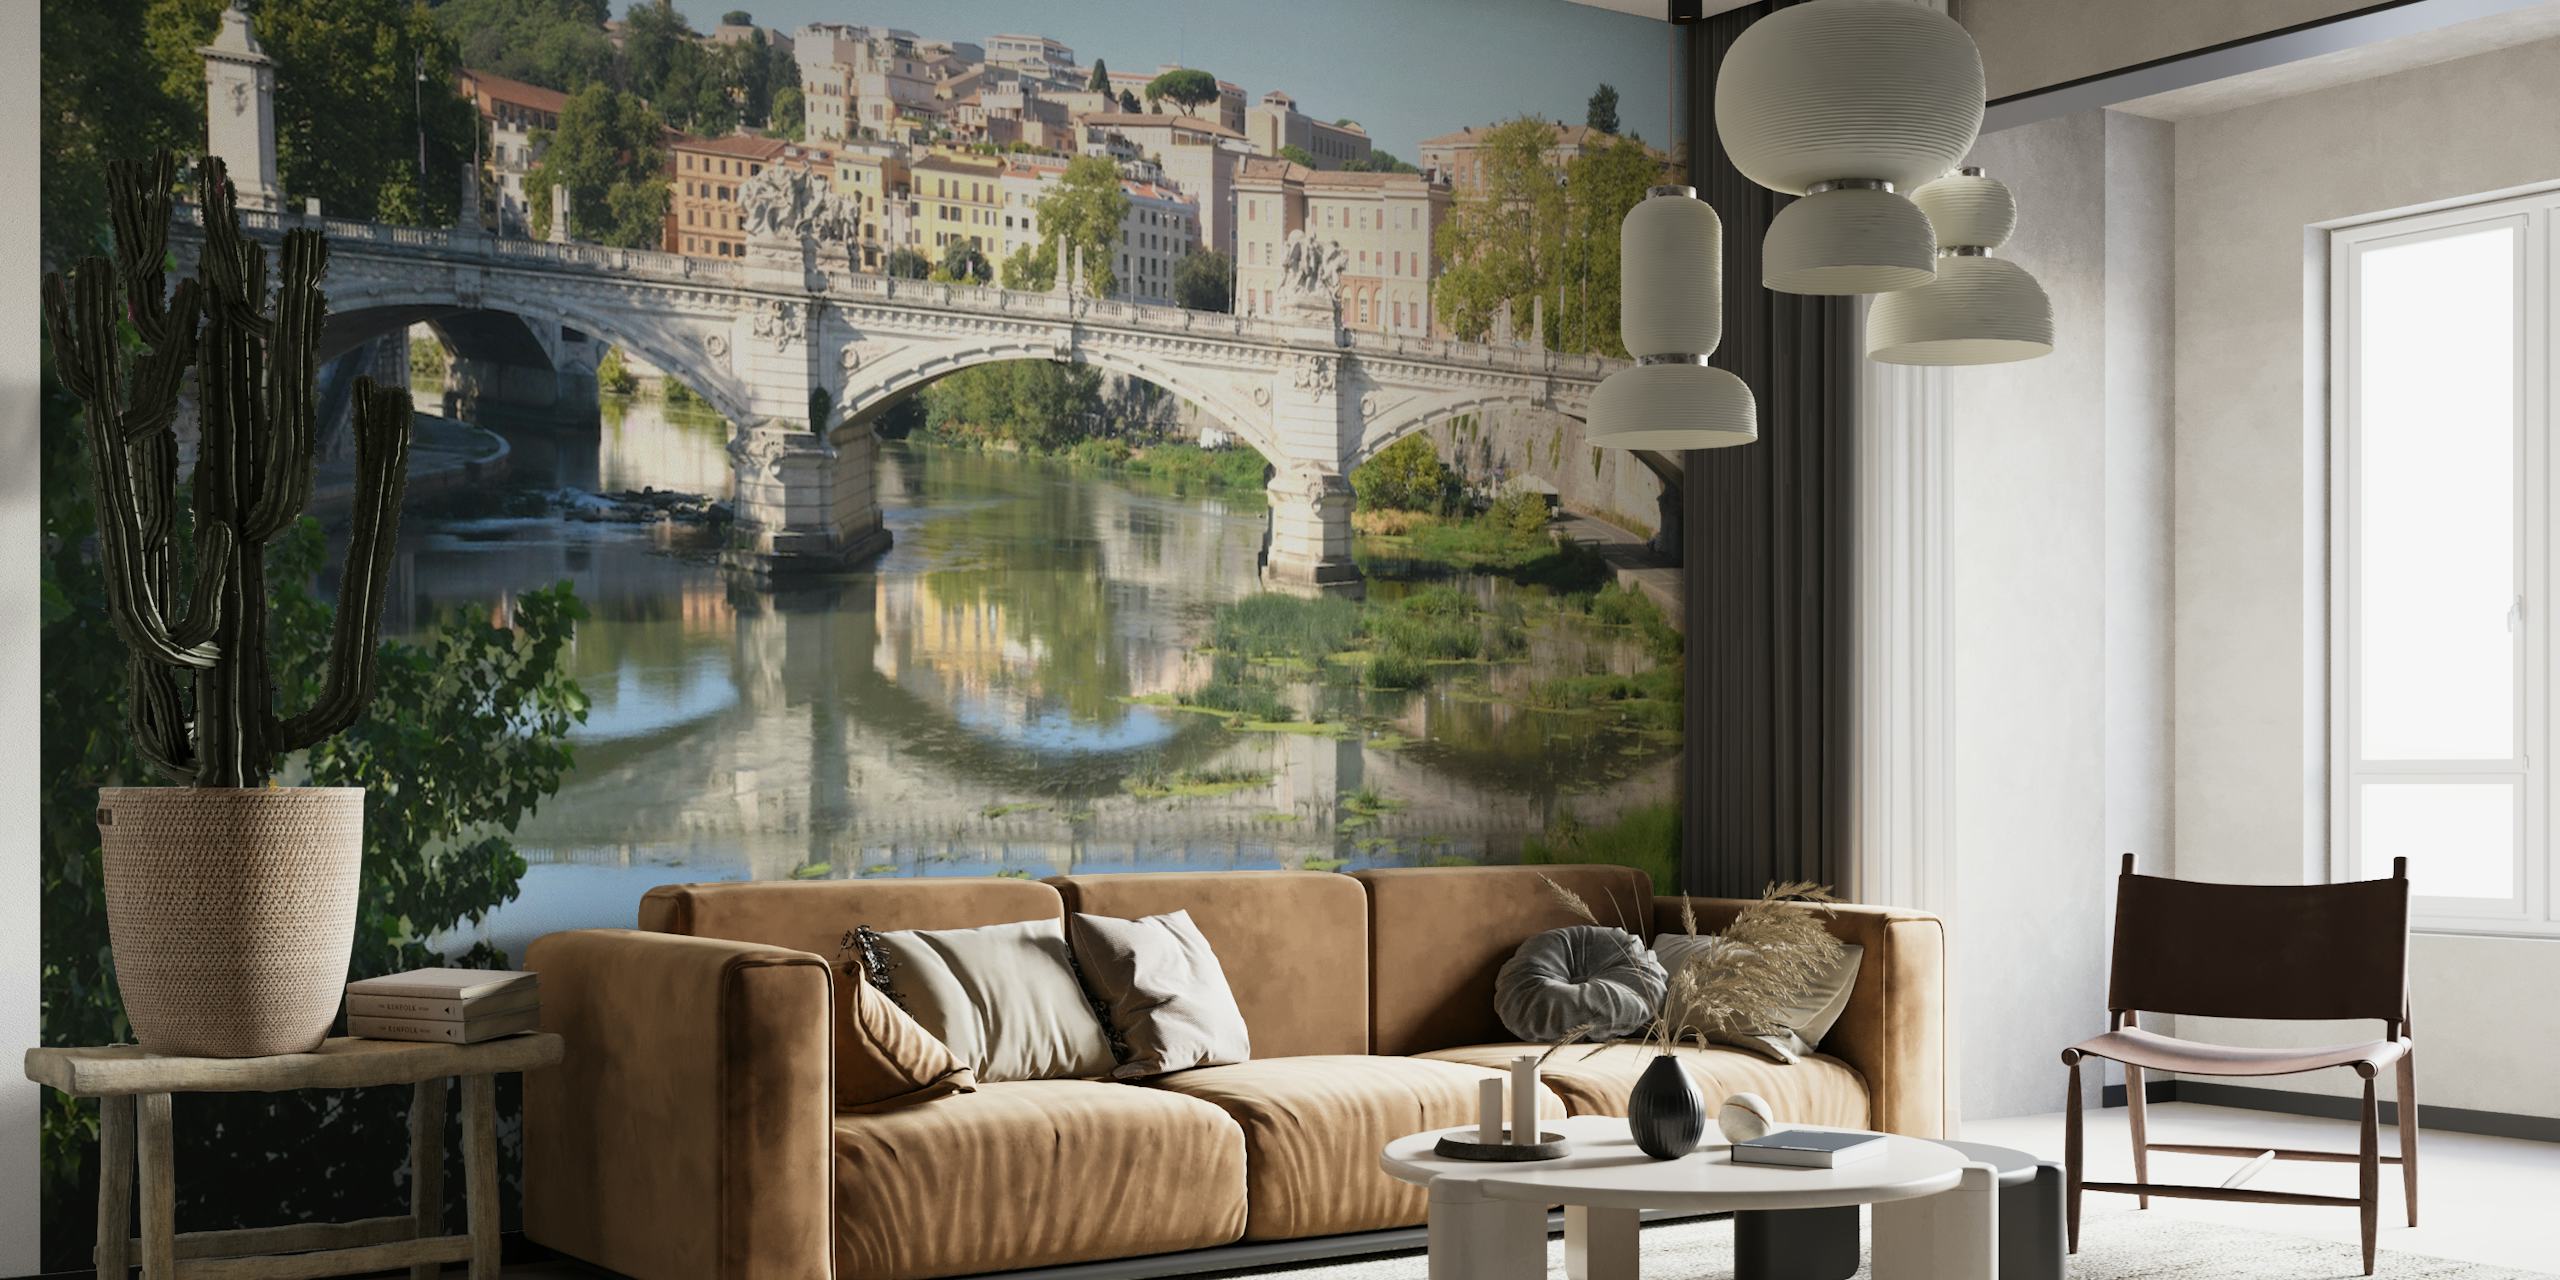 Tiber River Dream in Rome 1 behang